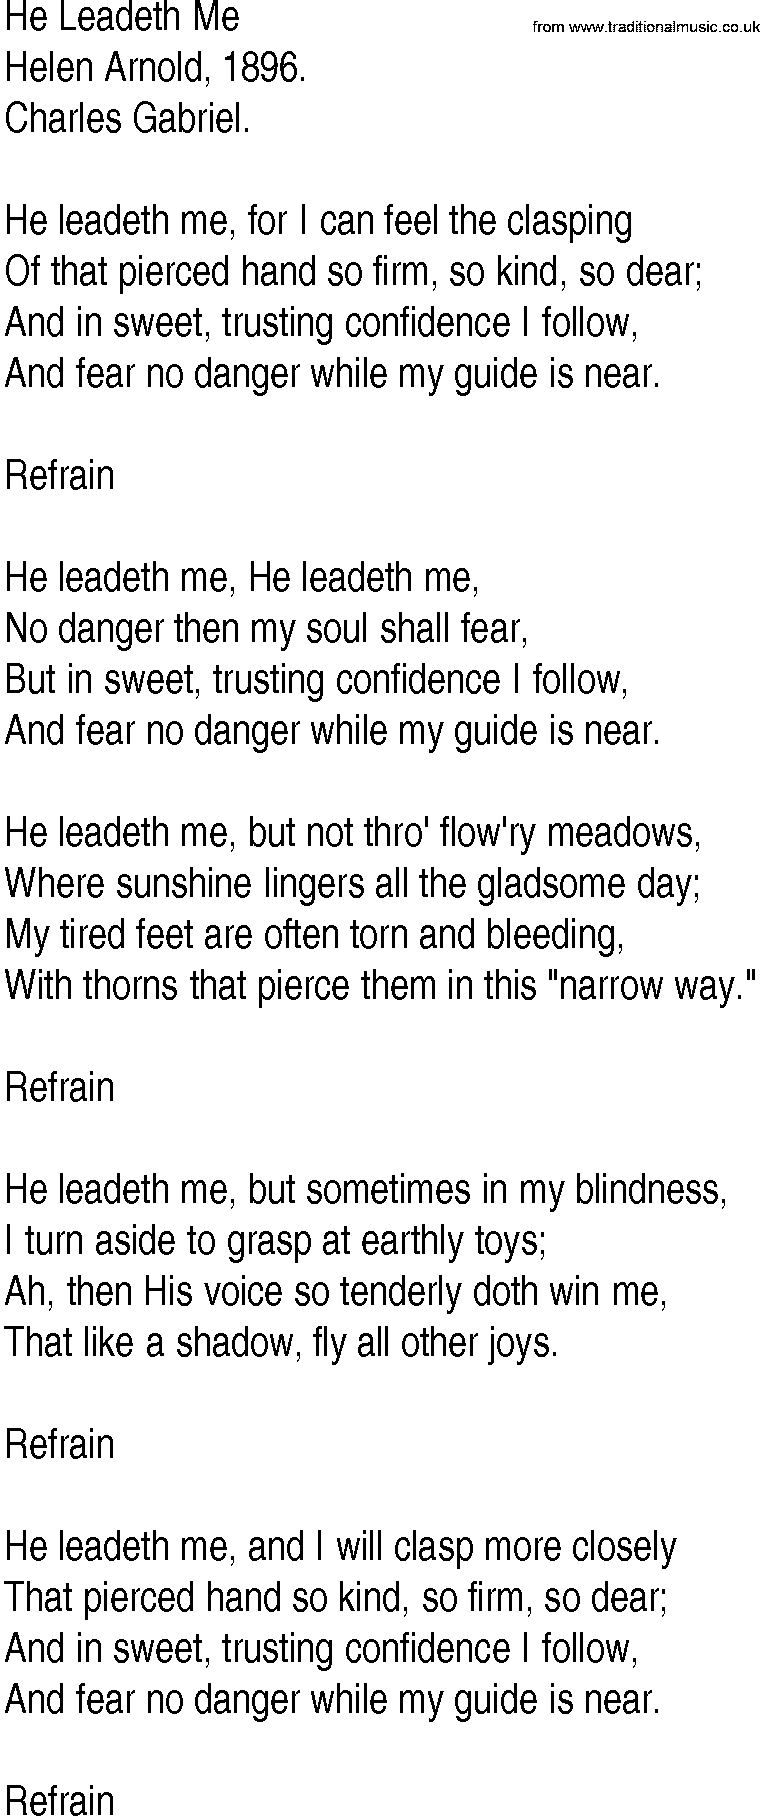 Hymn and Gospel Song: He Leadeth Me by Helen Arnold lyrics